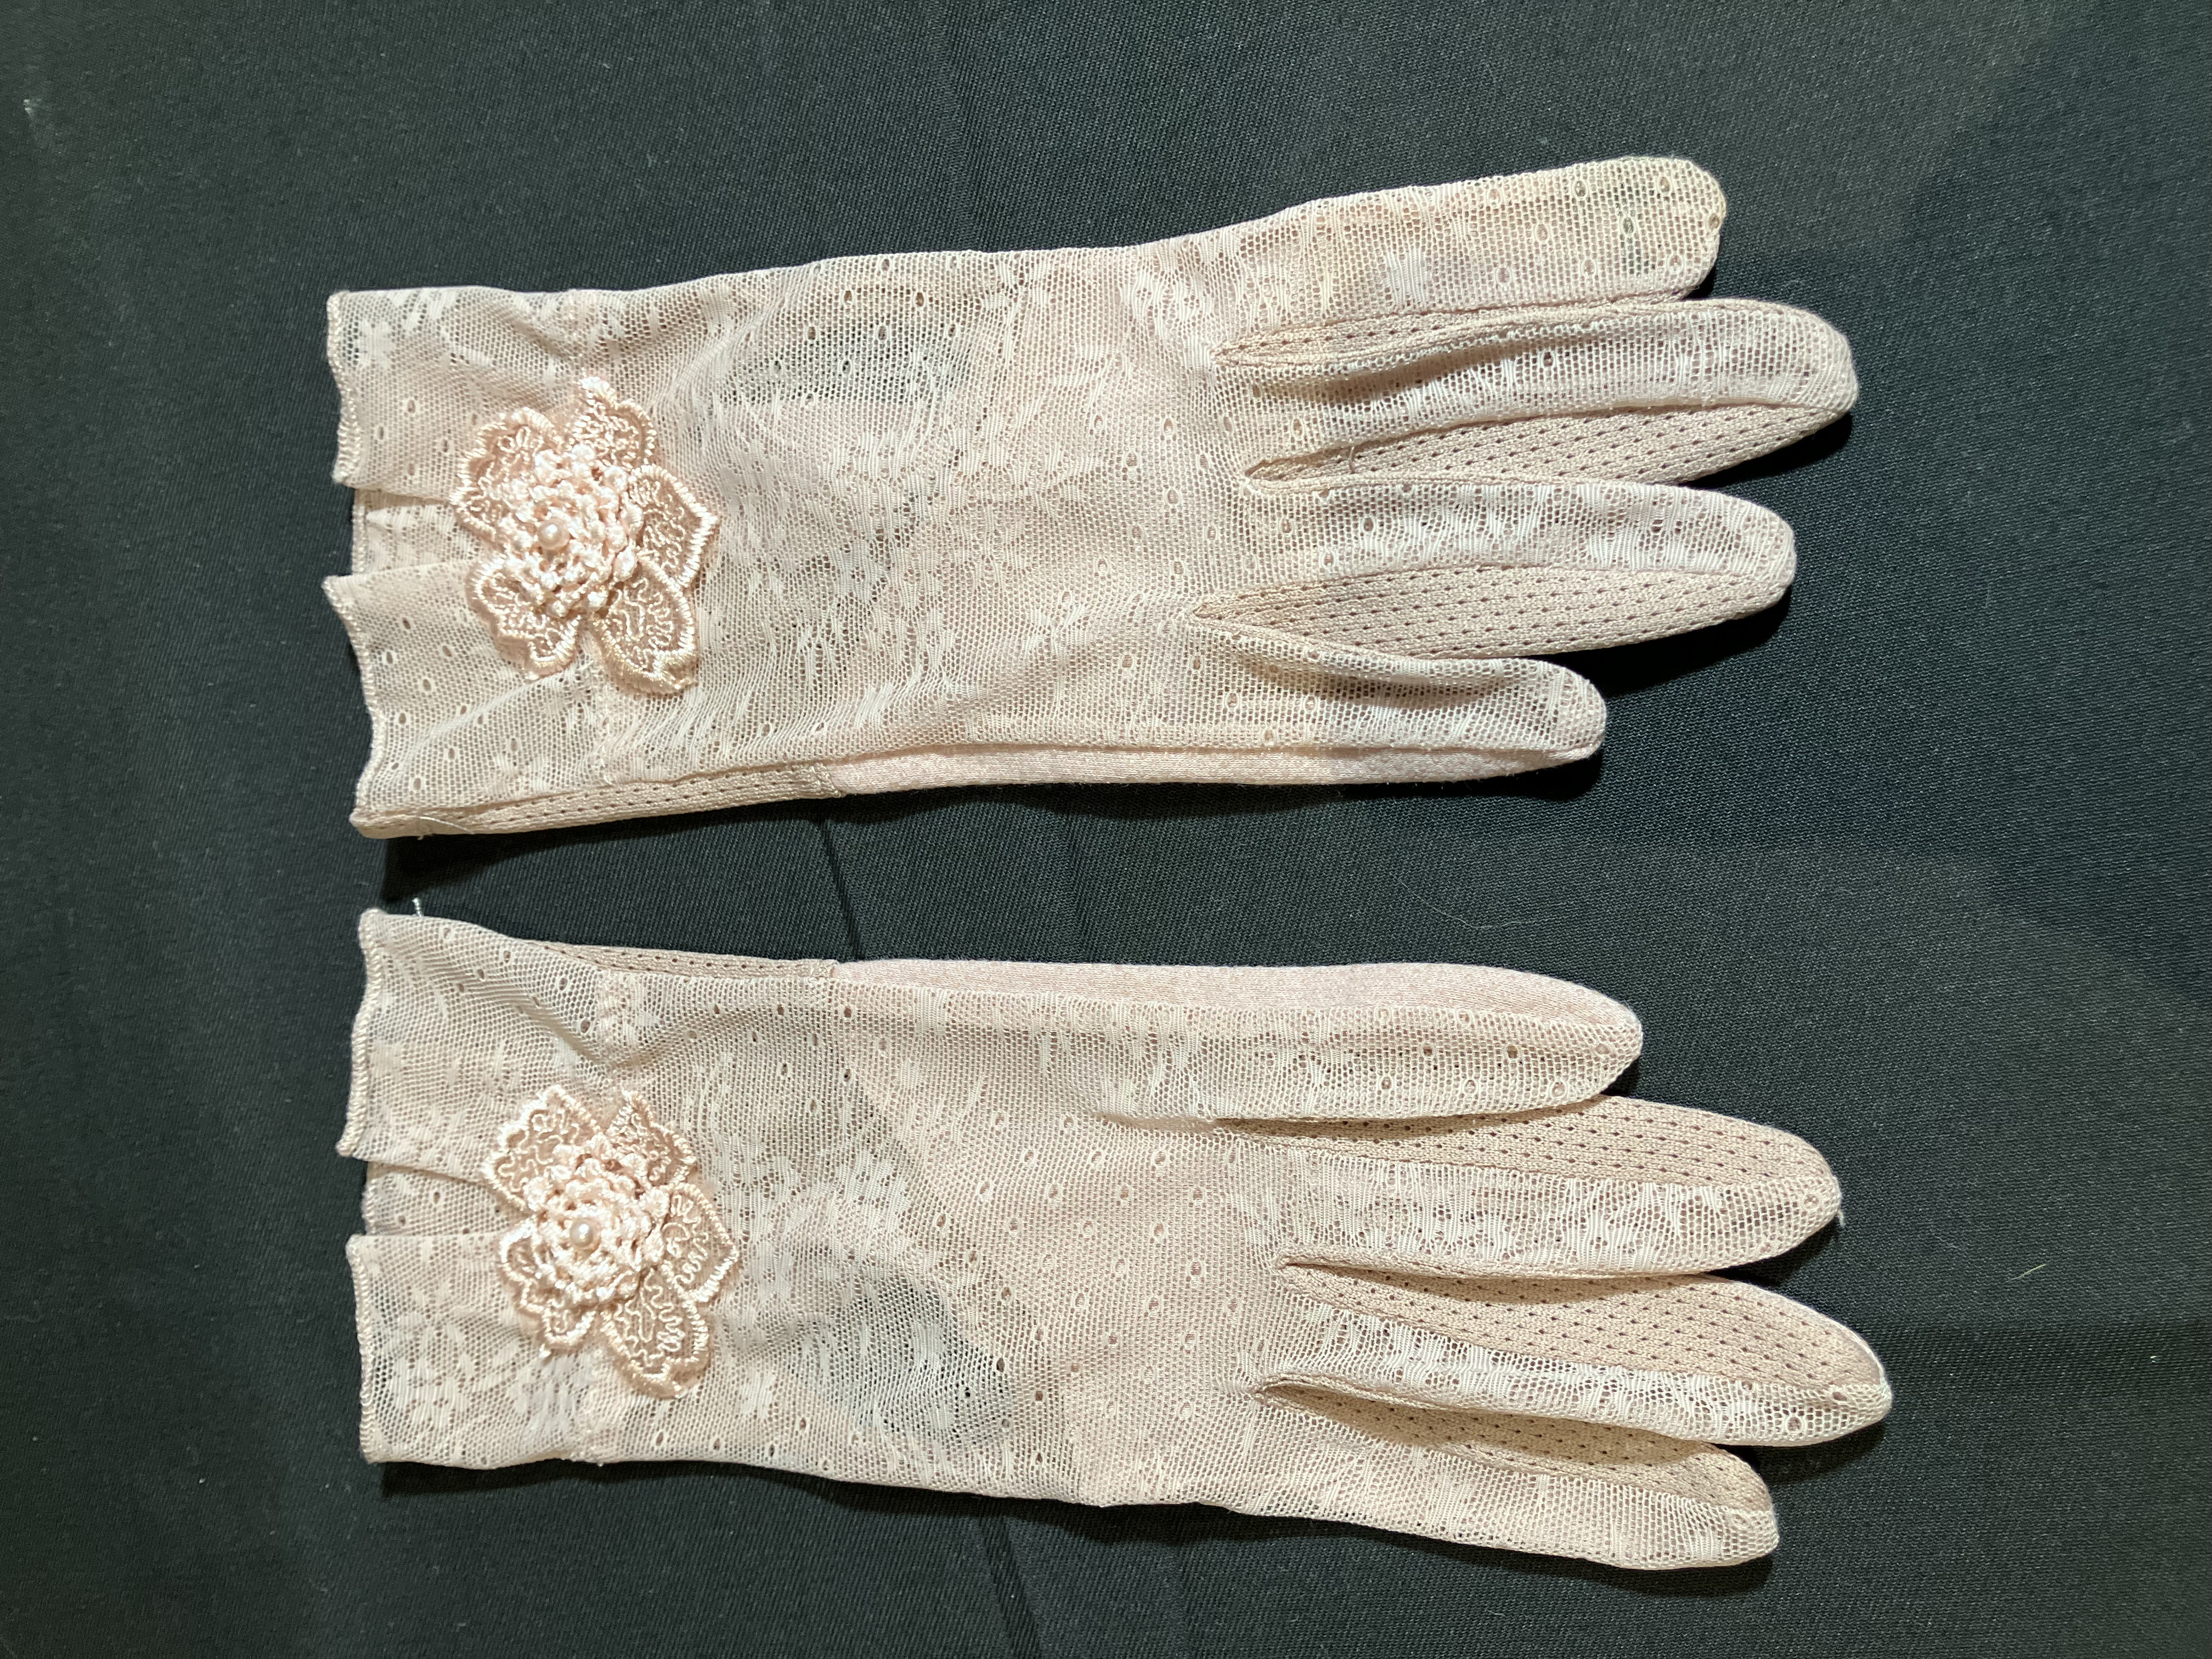 Lace Gloves Worn By Vanessa Hudgens